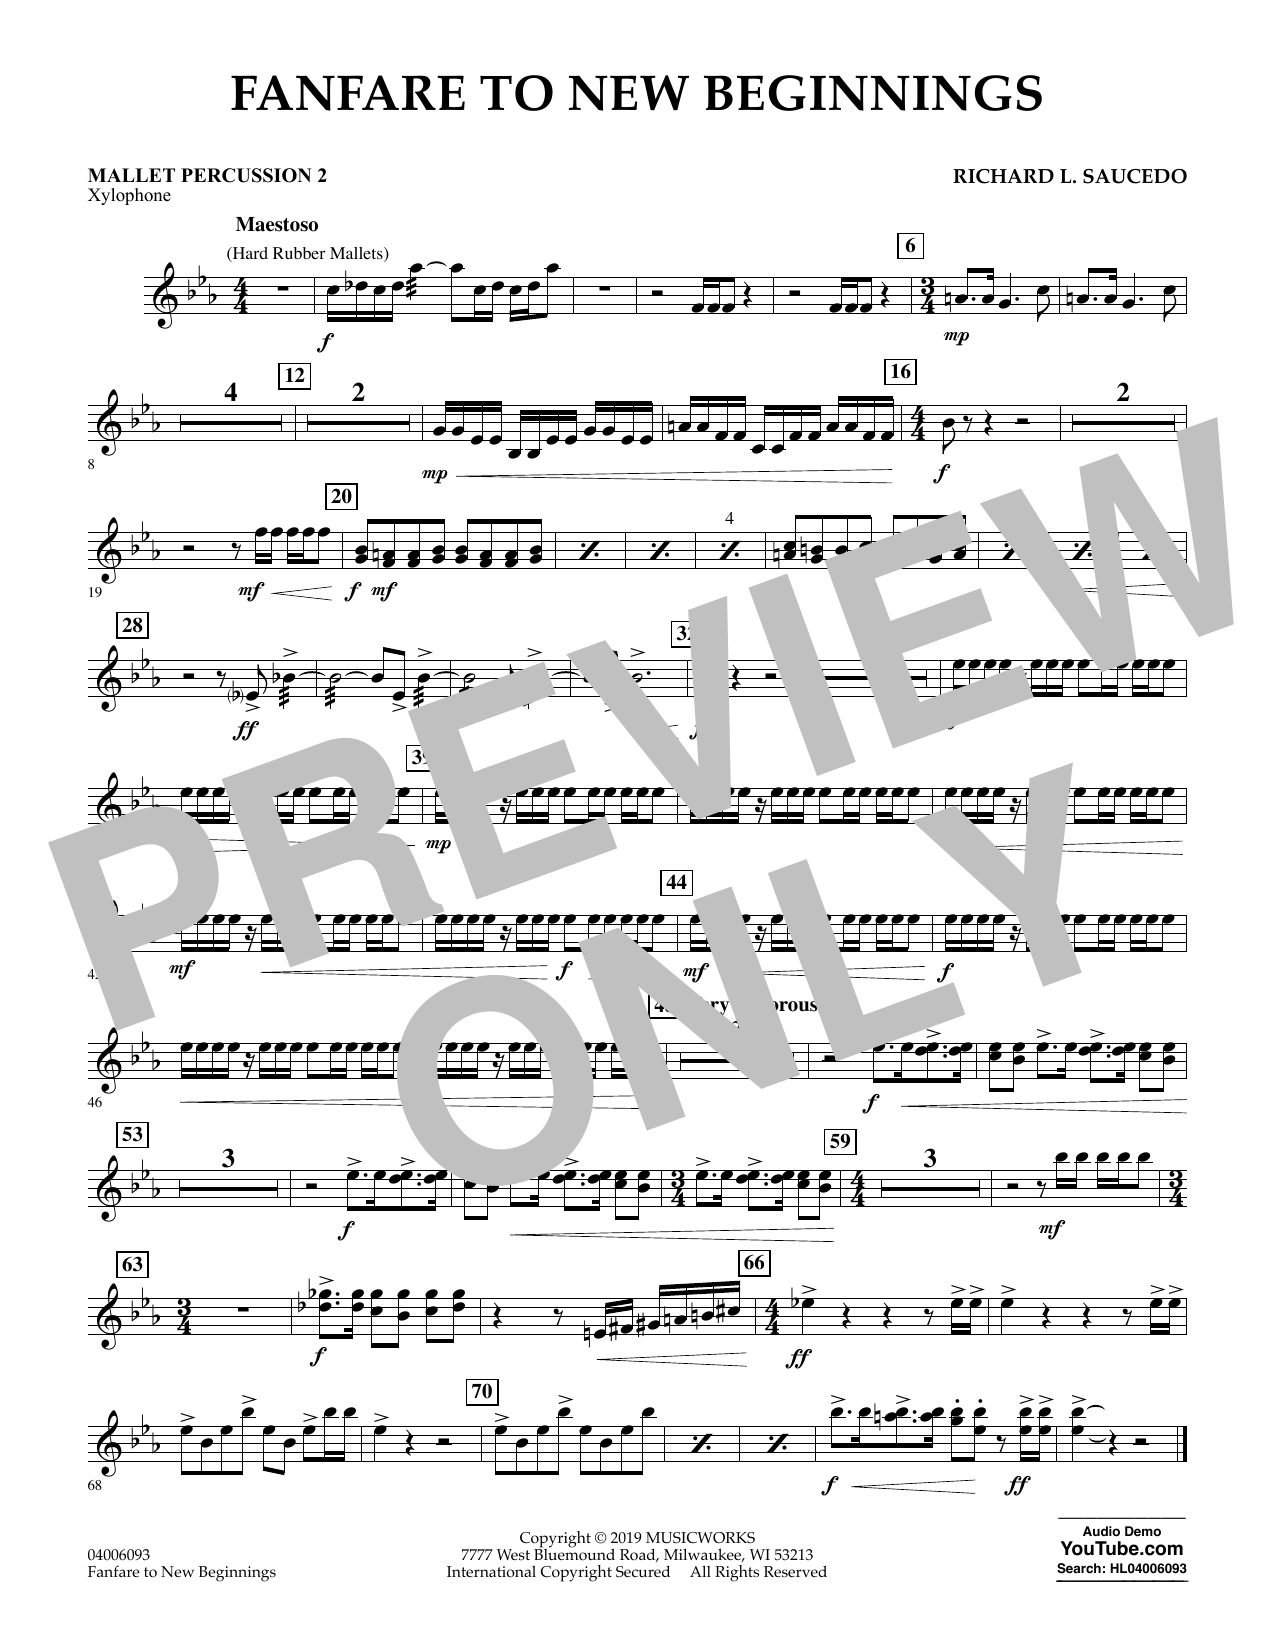 Download Richard L. Saucedo Fanfare for New Beginnings - Mallet Per Sheet Music